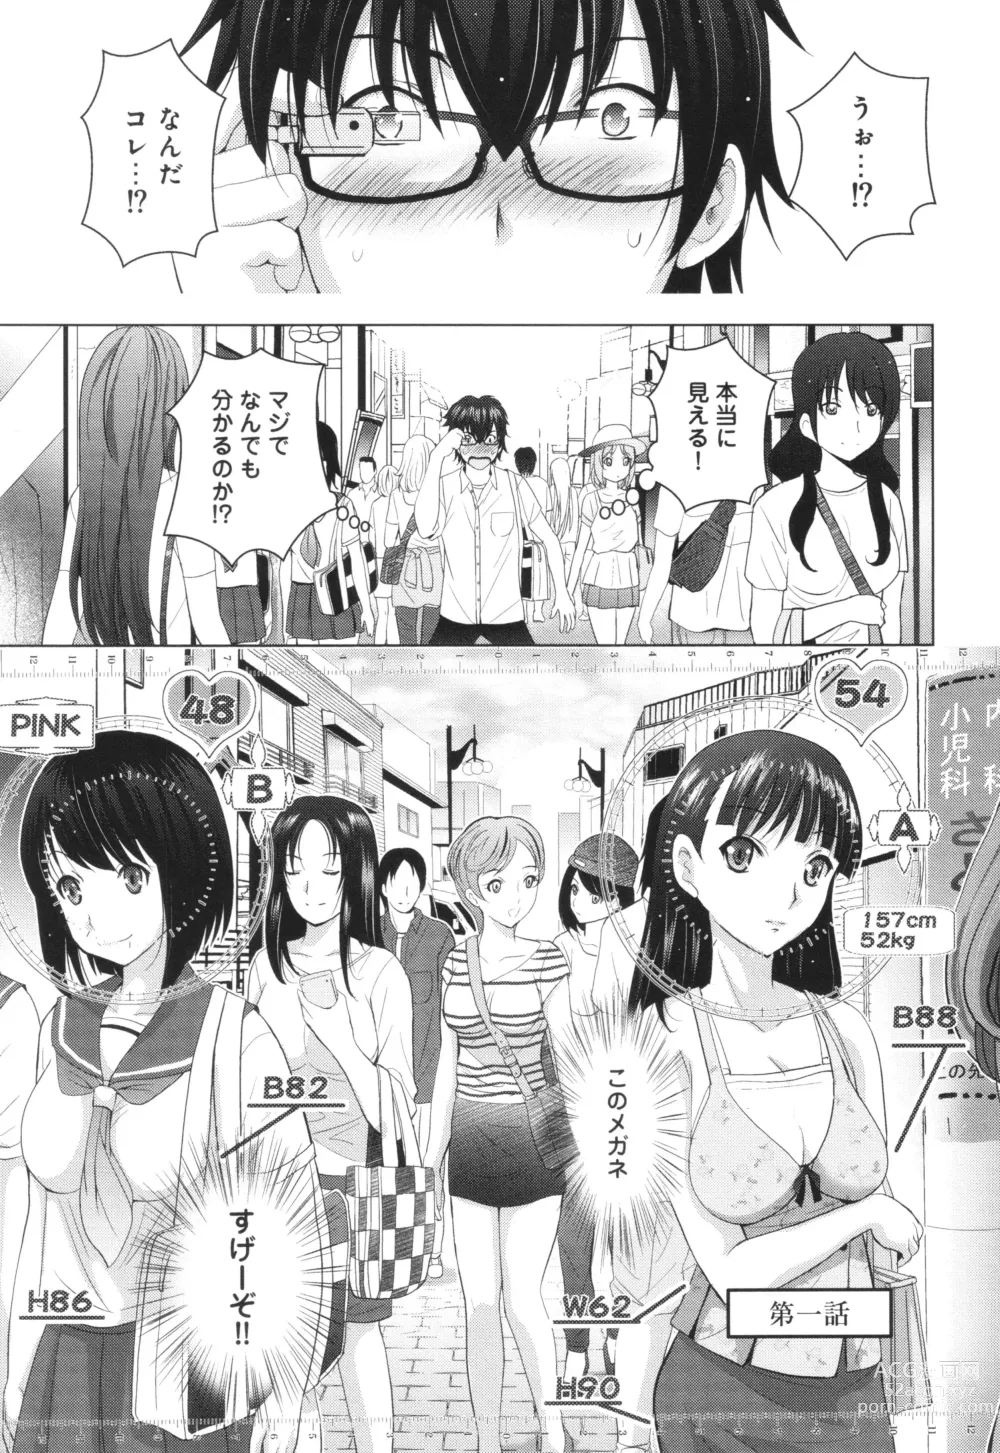 Page 10 of manga Hadaka no Panorama